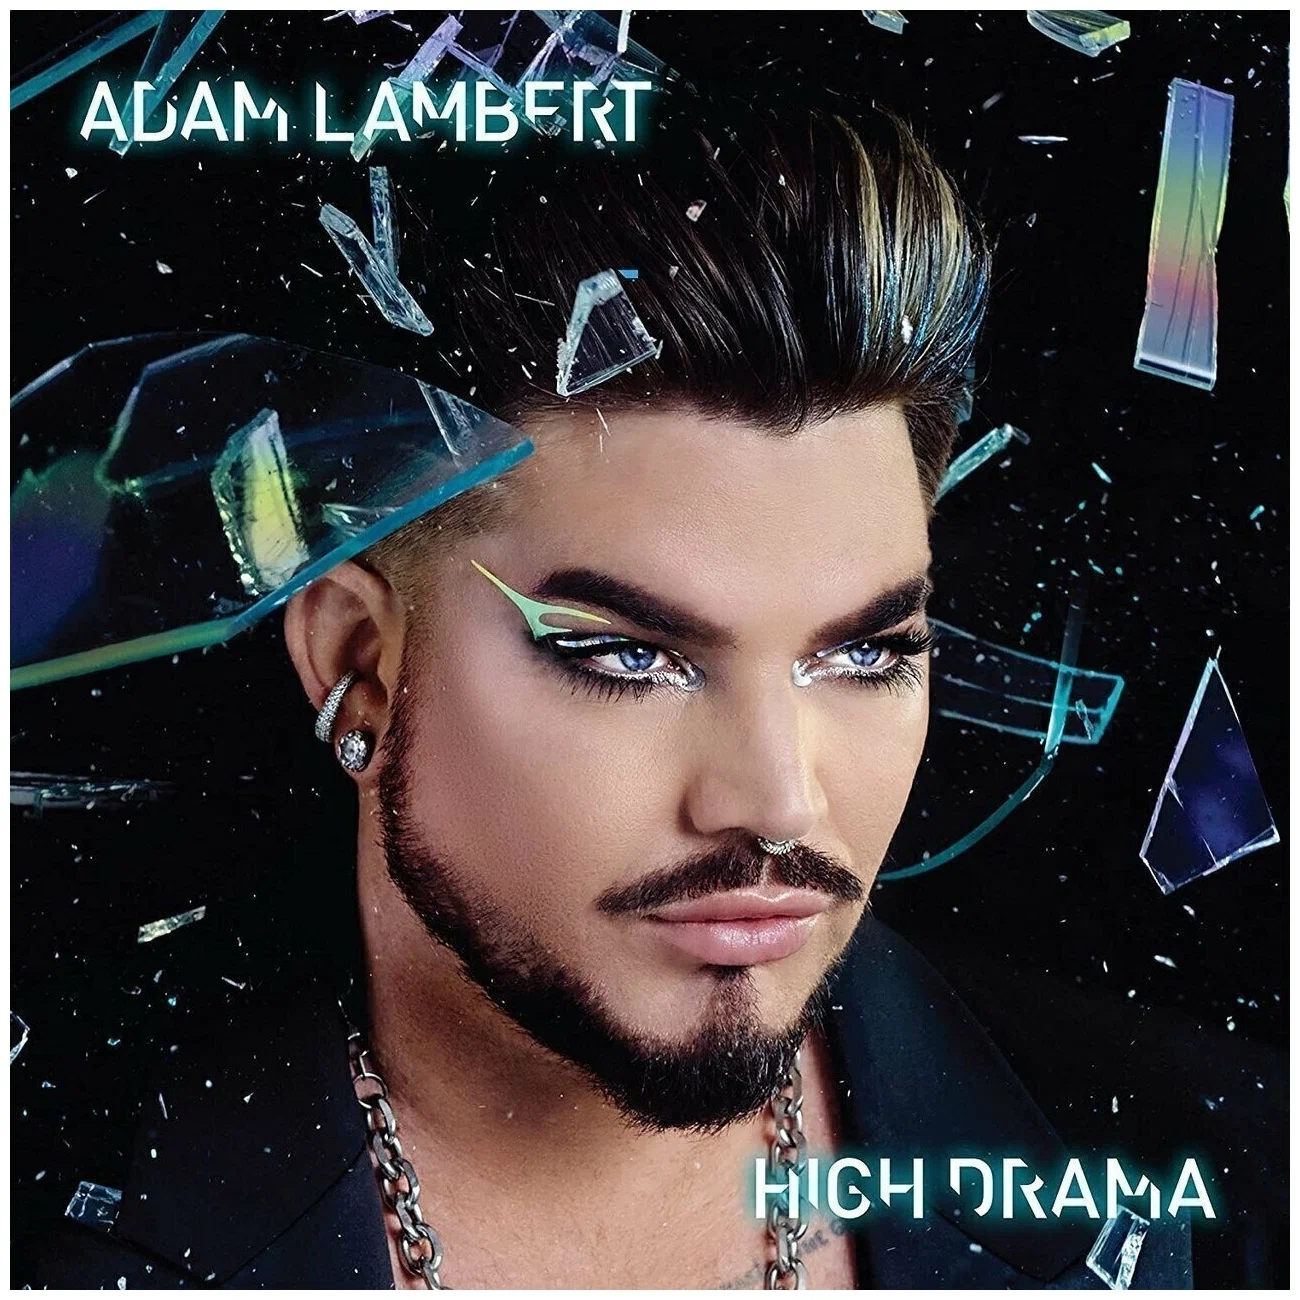 Виниловая Пластинка Lambert, Adam, High Drama (5054197308628) виниловая пластинка adam lambert high drama lp